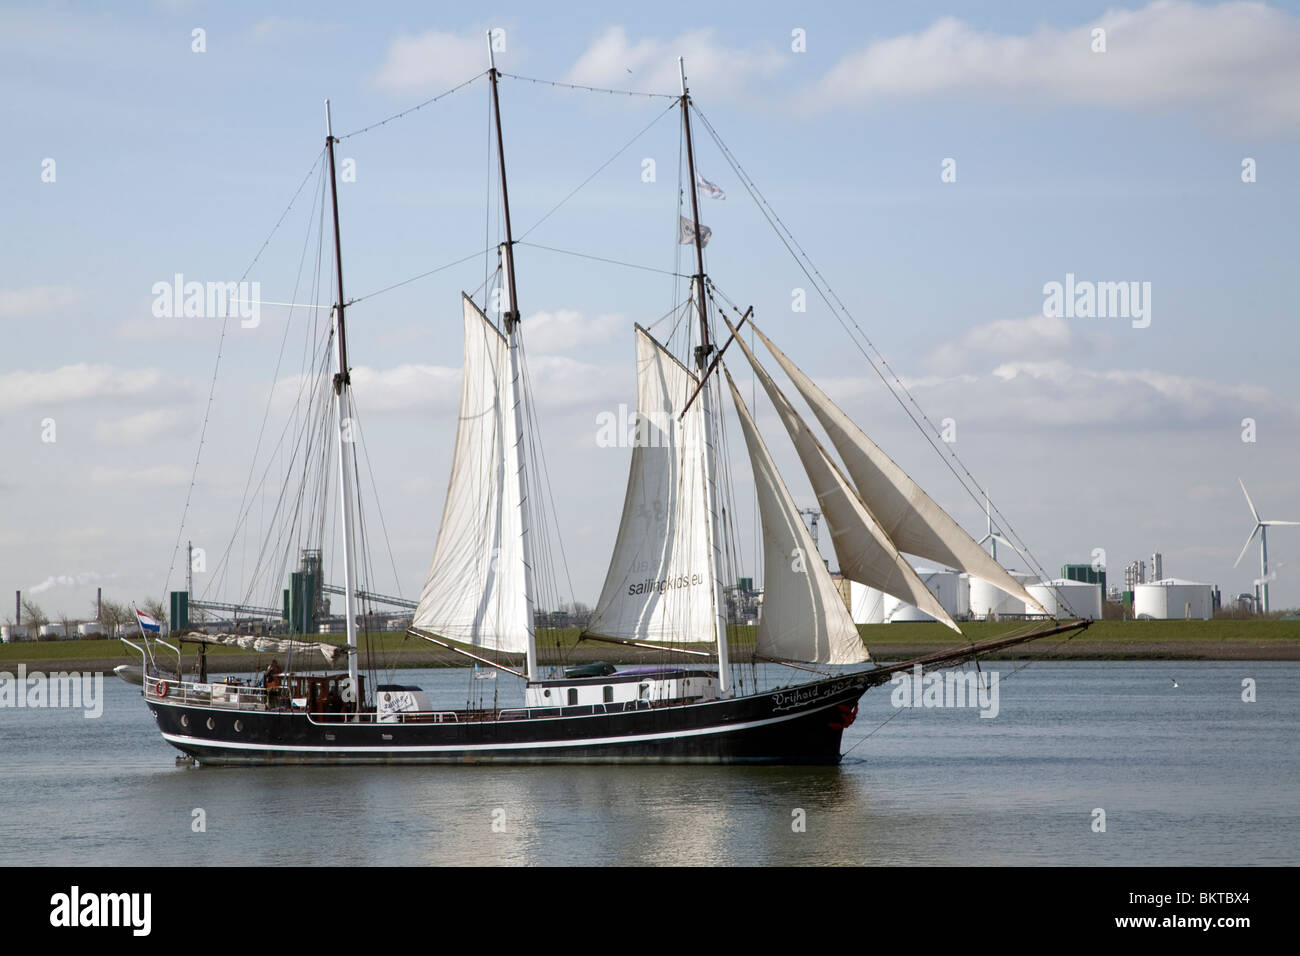 Segelschiff, Nieuwe Waterweg Schifffahrtskanal zwischen Maasluis und Hoek van Holland, Niederlande Stockfoto